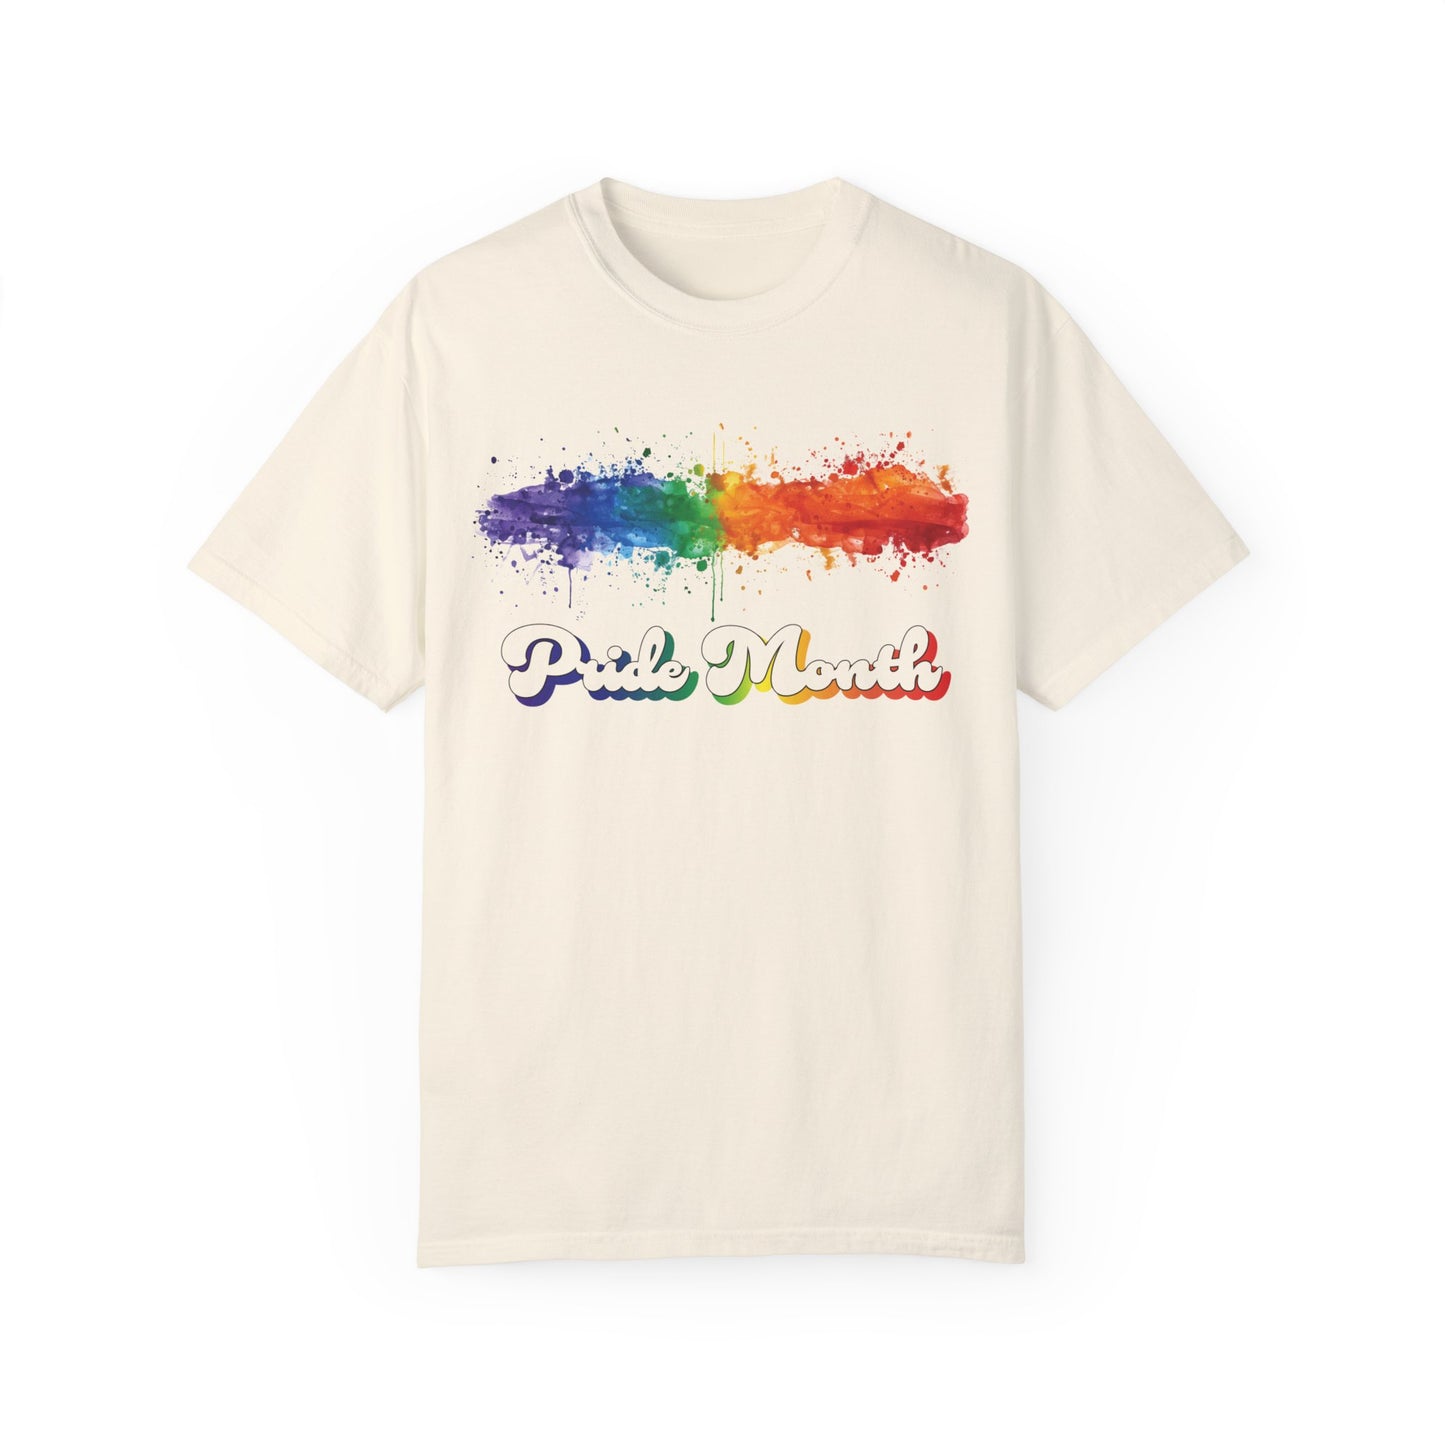 LGBTQ Shirt, LGBTQ Pride Month Shirt, Spreading Love Shirt, Love T-Shirt, Lover Shirt, Equality Shirt, Love No Boundaries Shirt, LGBTQ Color